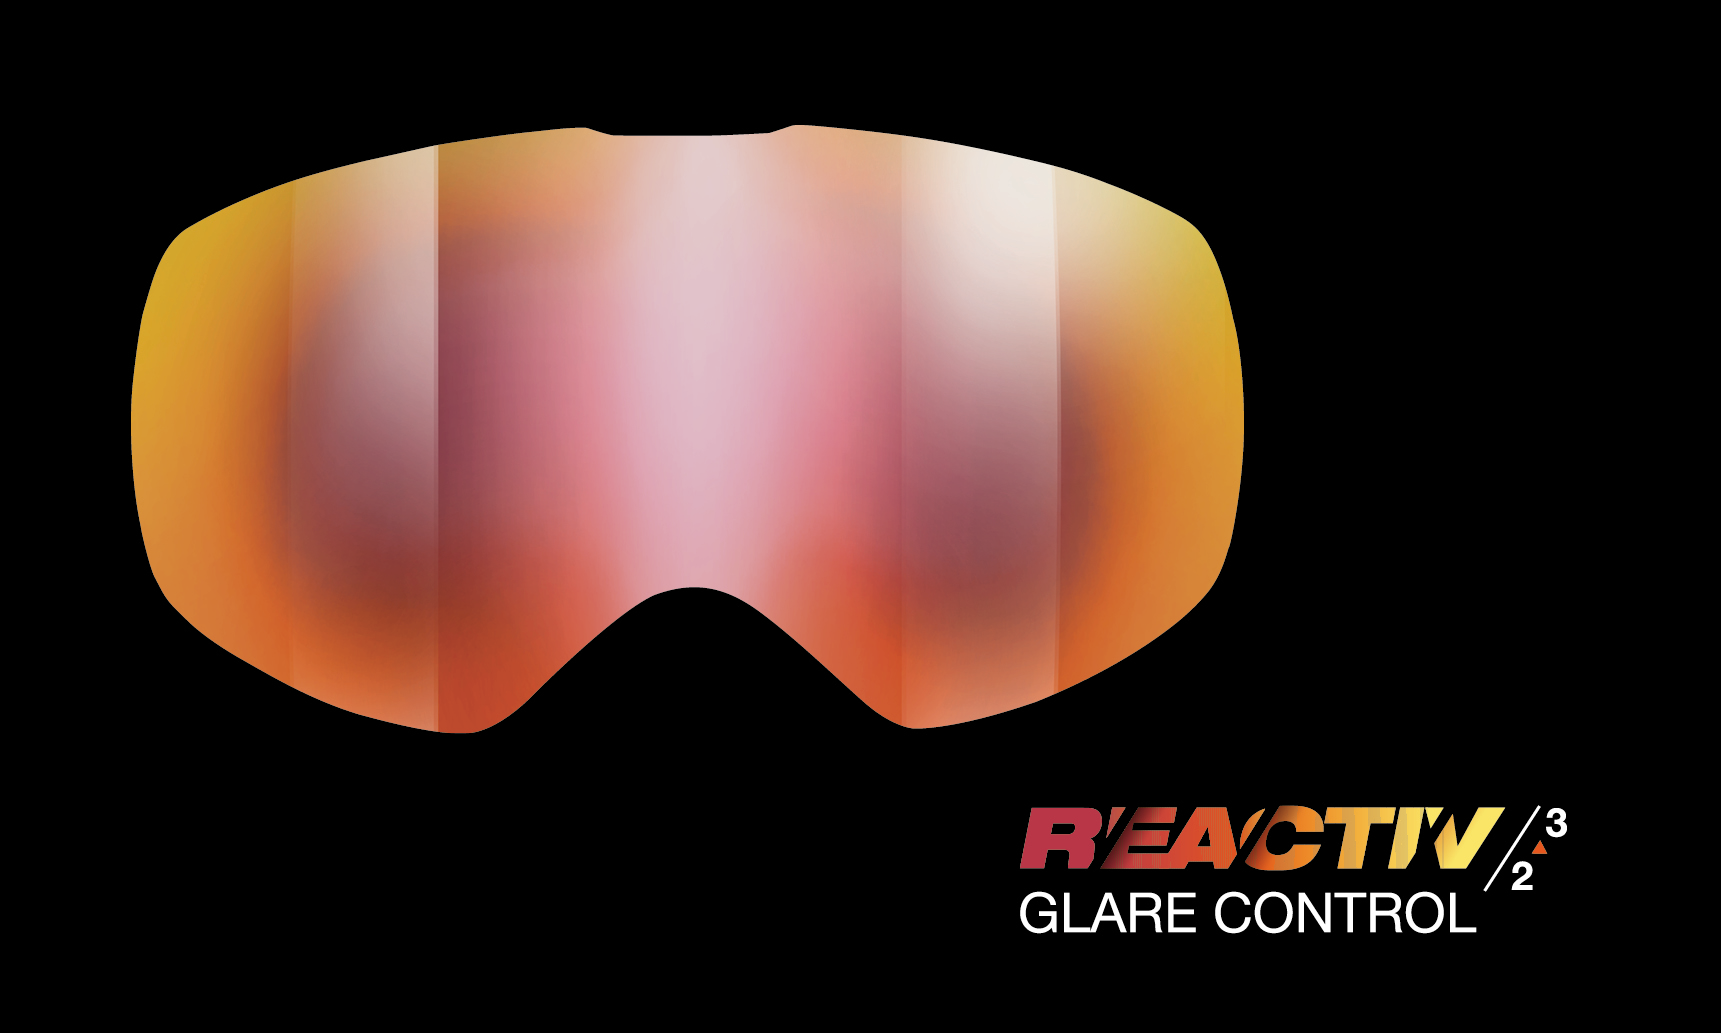 REACTIV 2-3 Glare Control